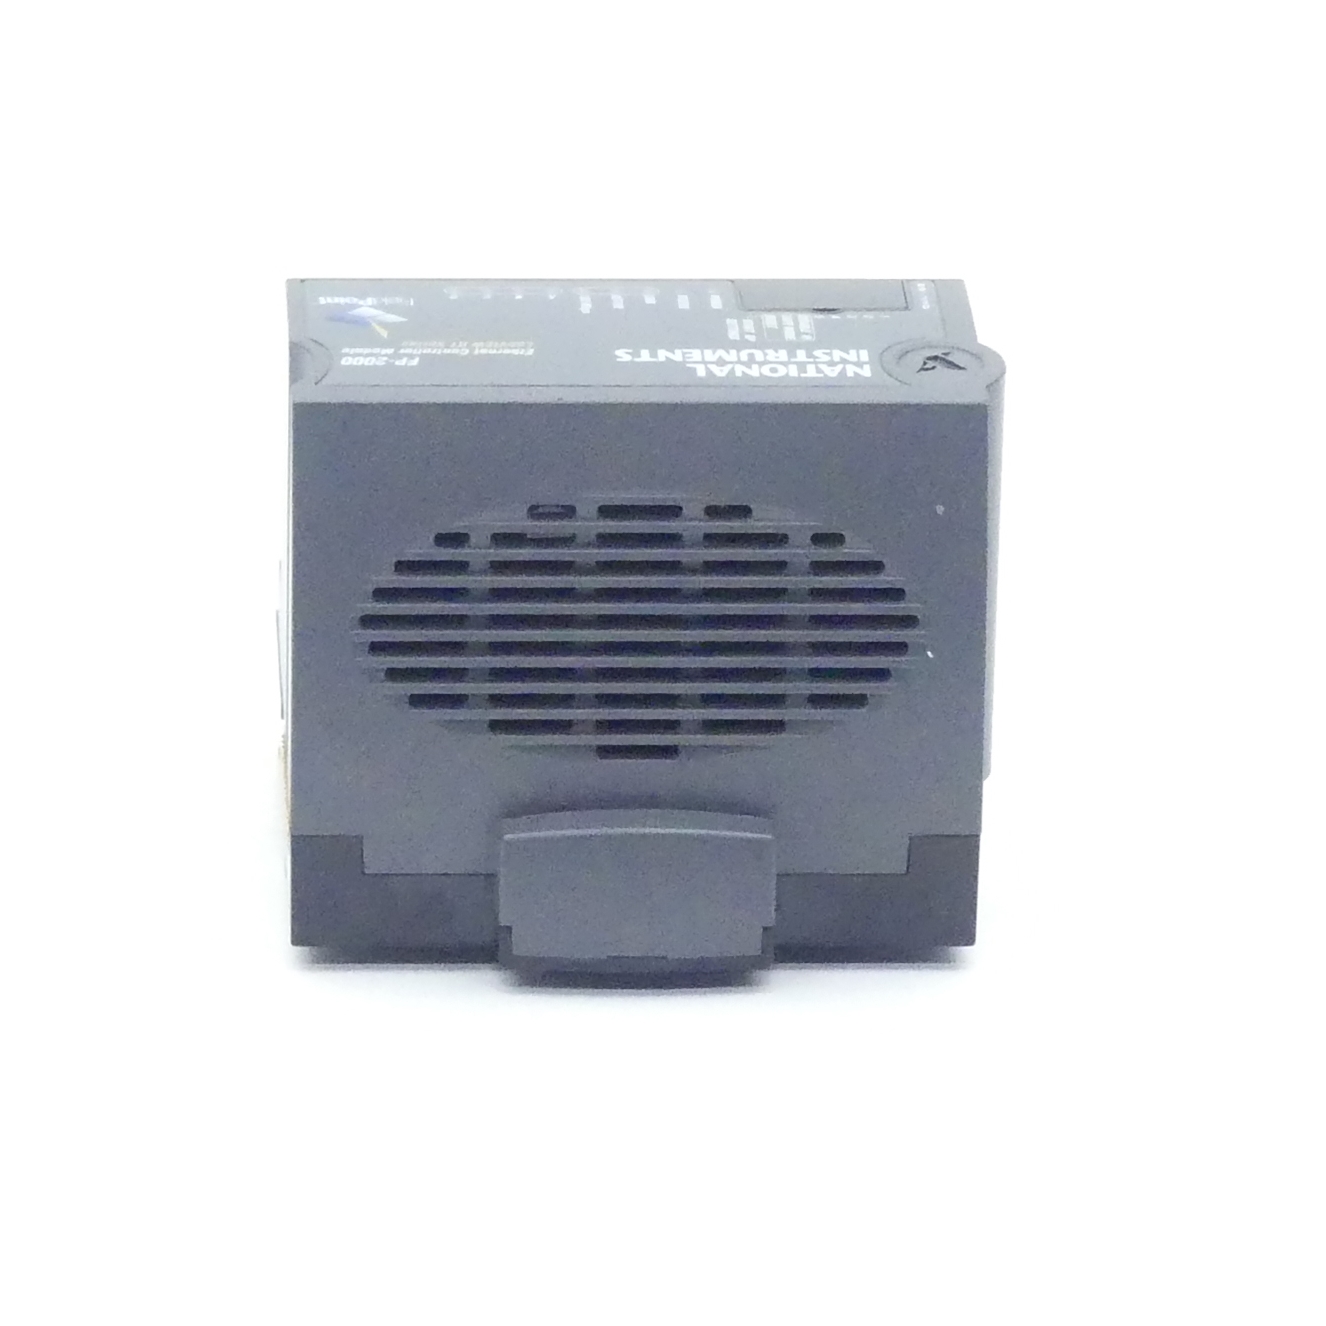 Ethernet Controller Module FP-2000 